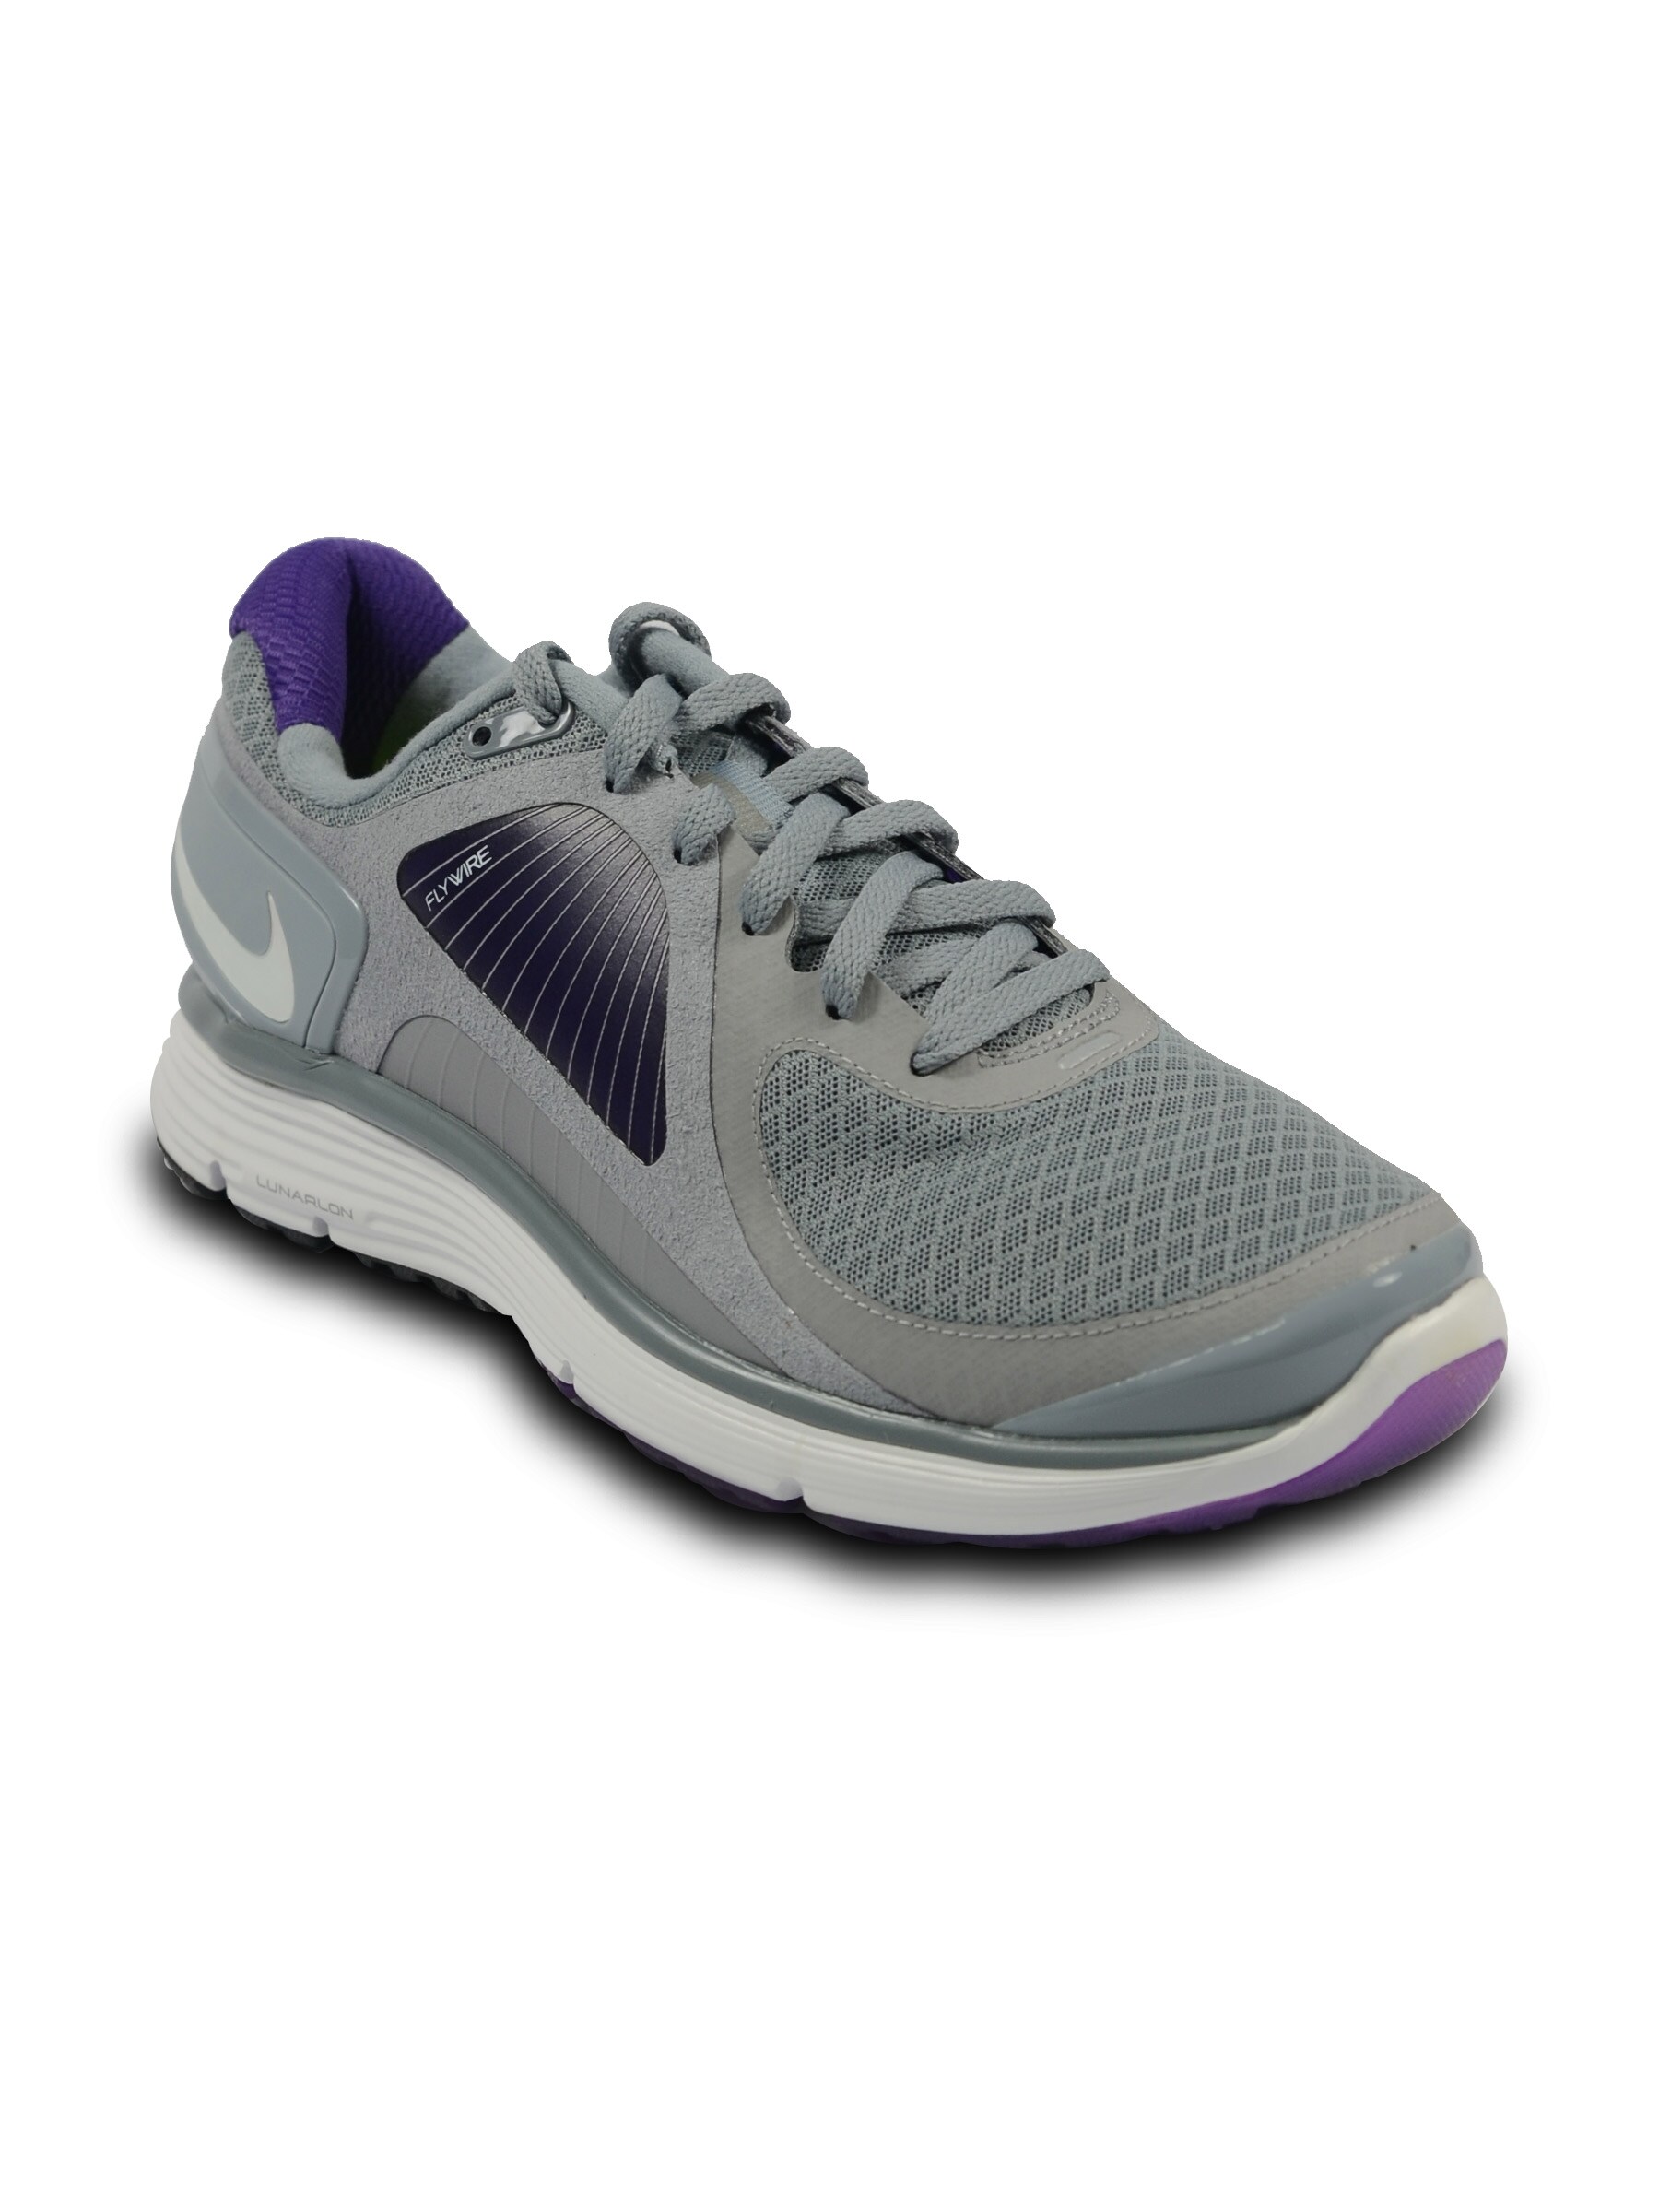 Nike Men's Lunarecl Purple Shoe